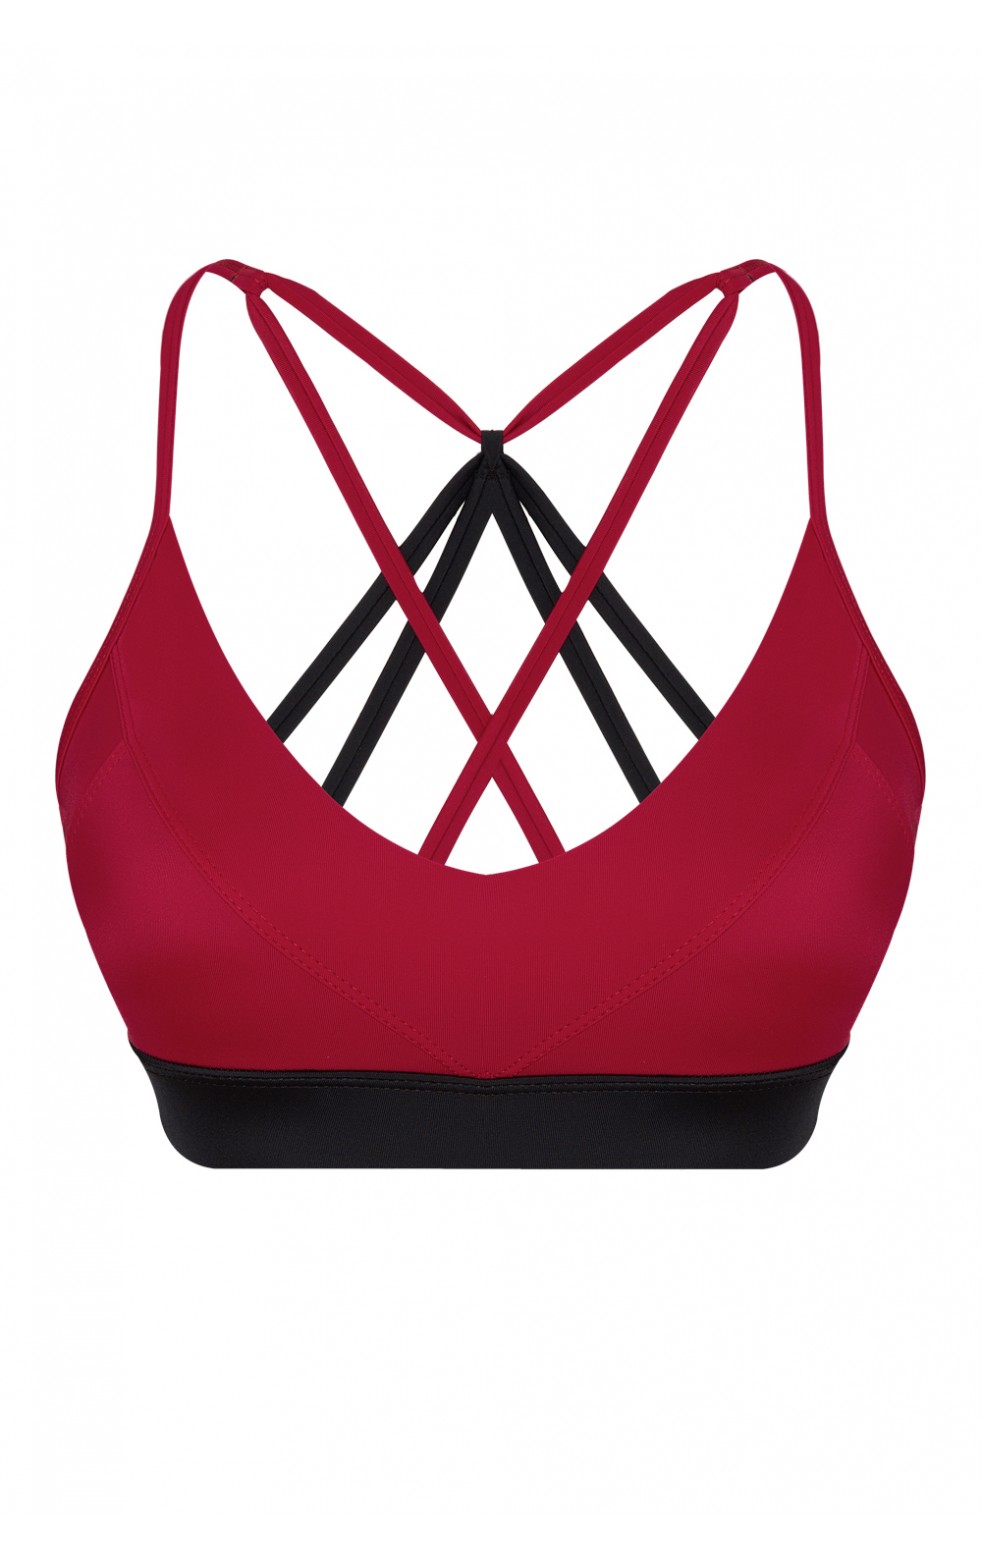 Aria ECONYL® Claret Red Sport Bra & Bikini Top